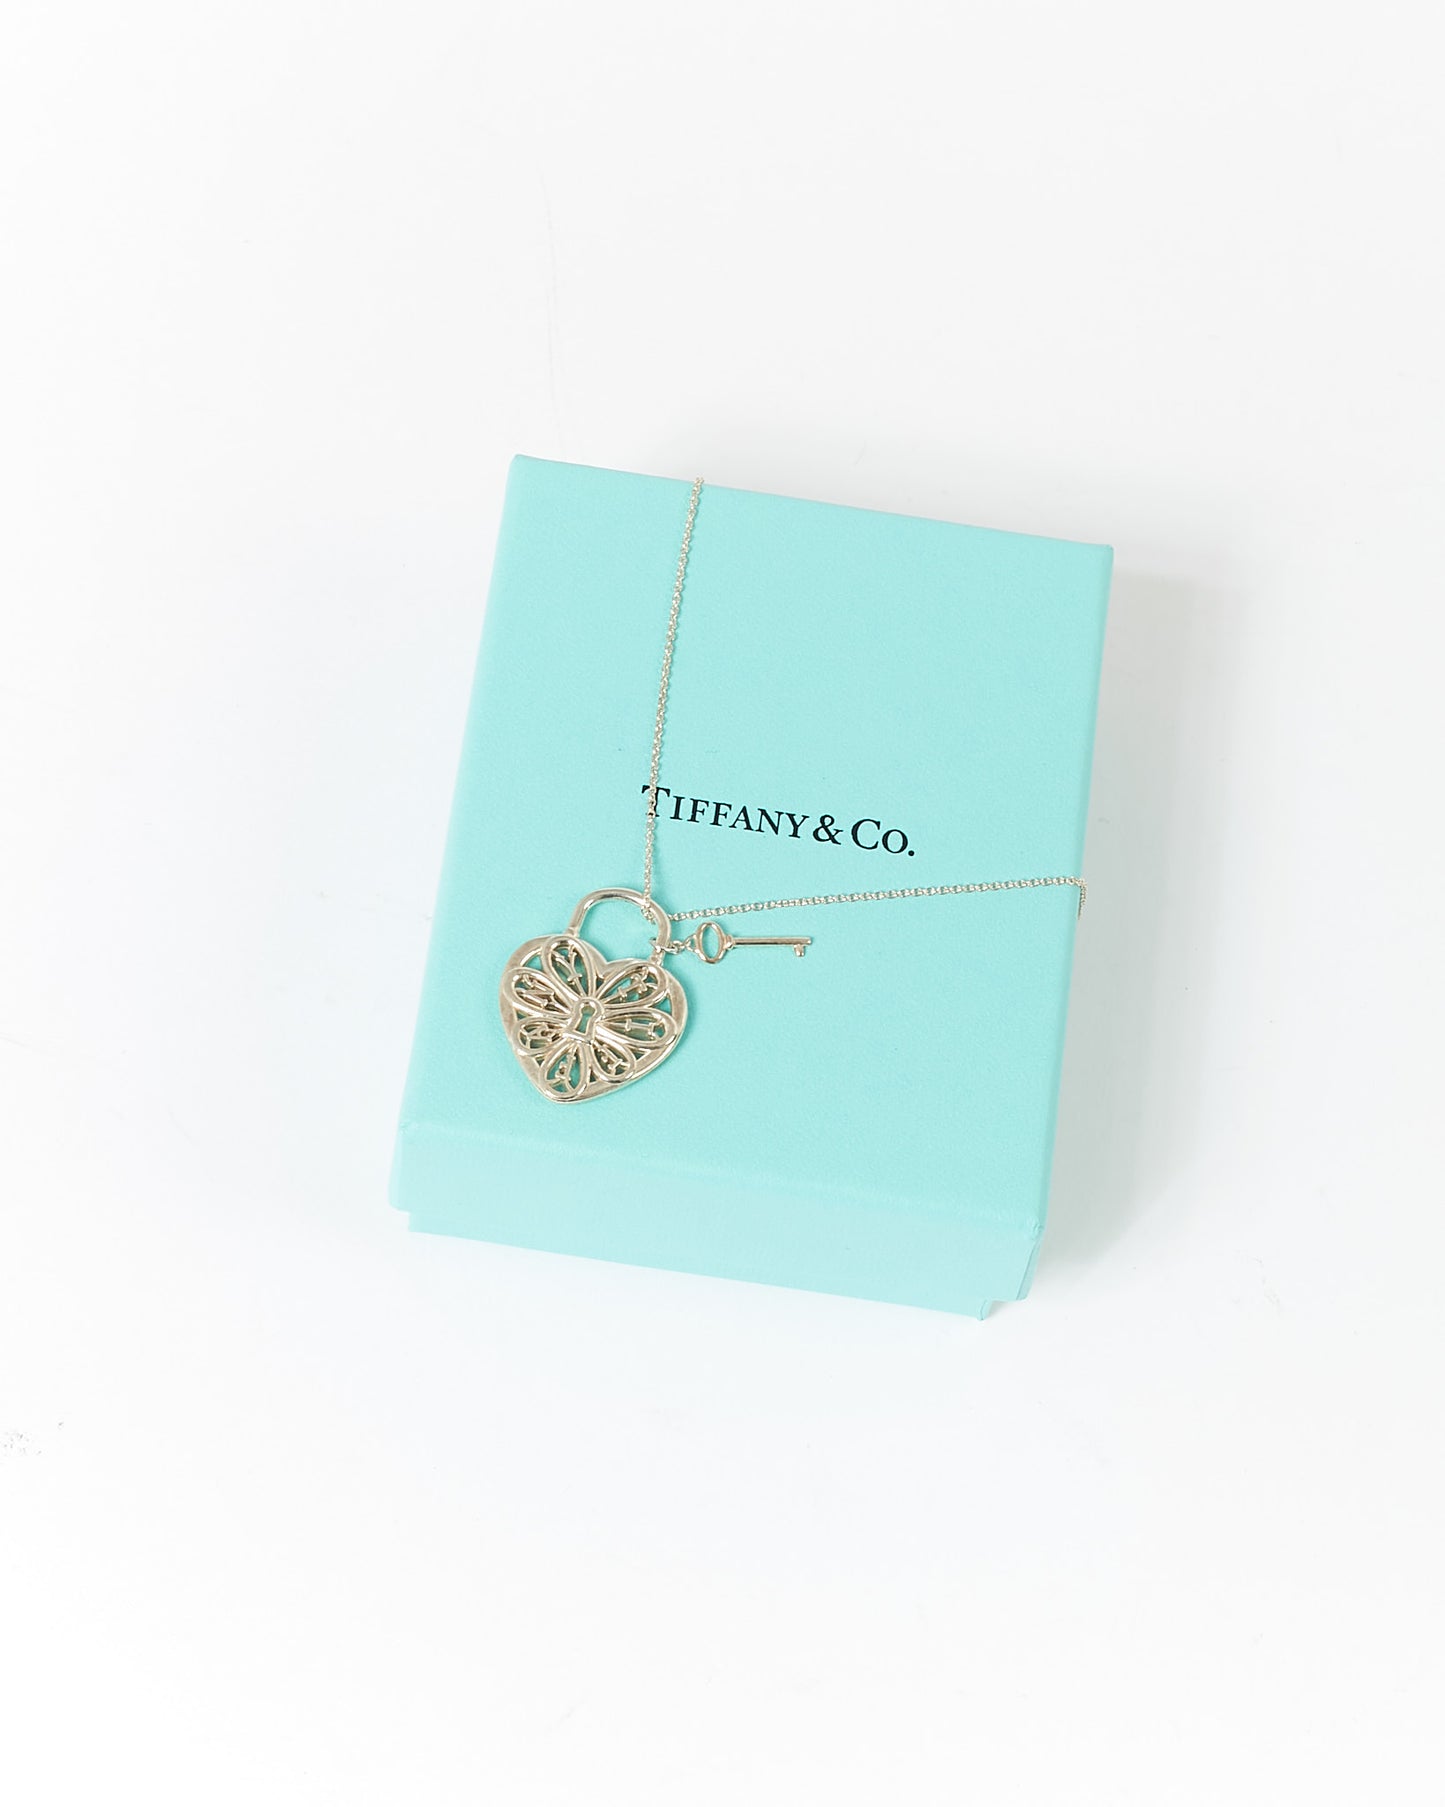 Tiffany & Co. Sterling Silver Filigree Heart Shaped Key Lock